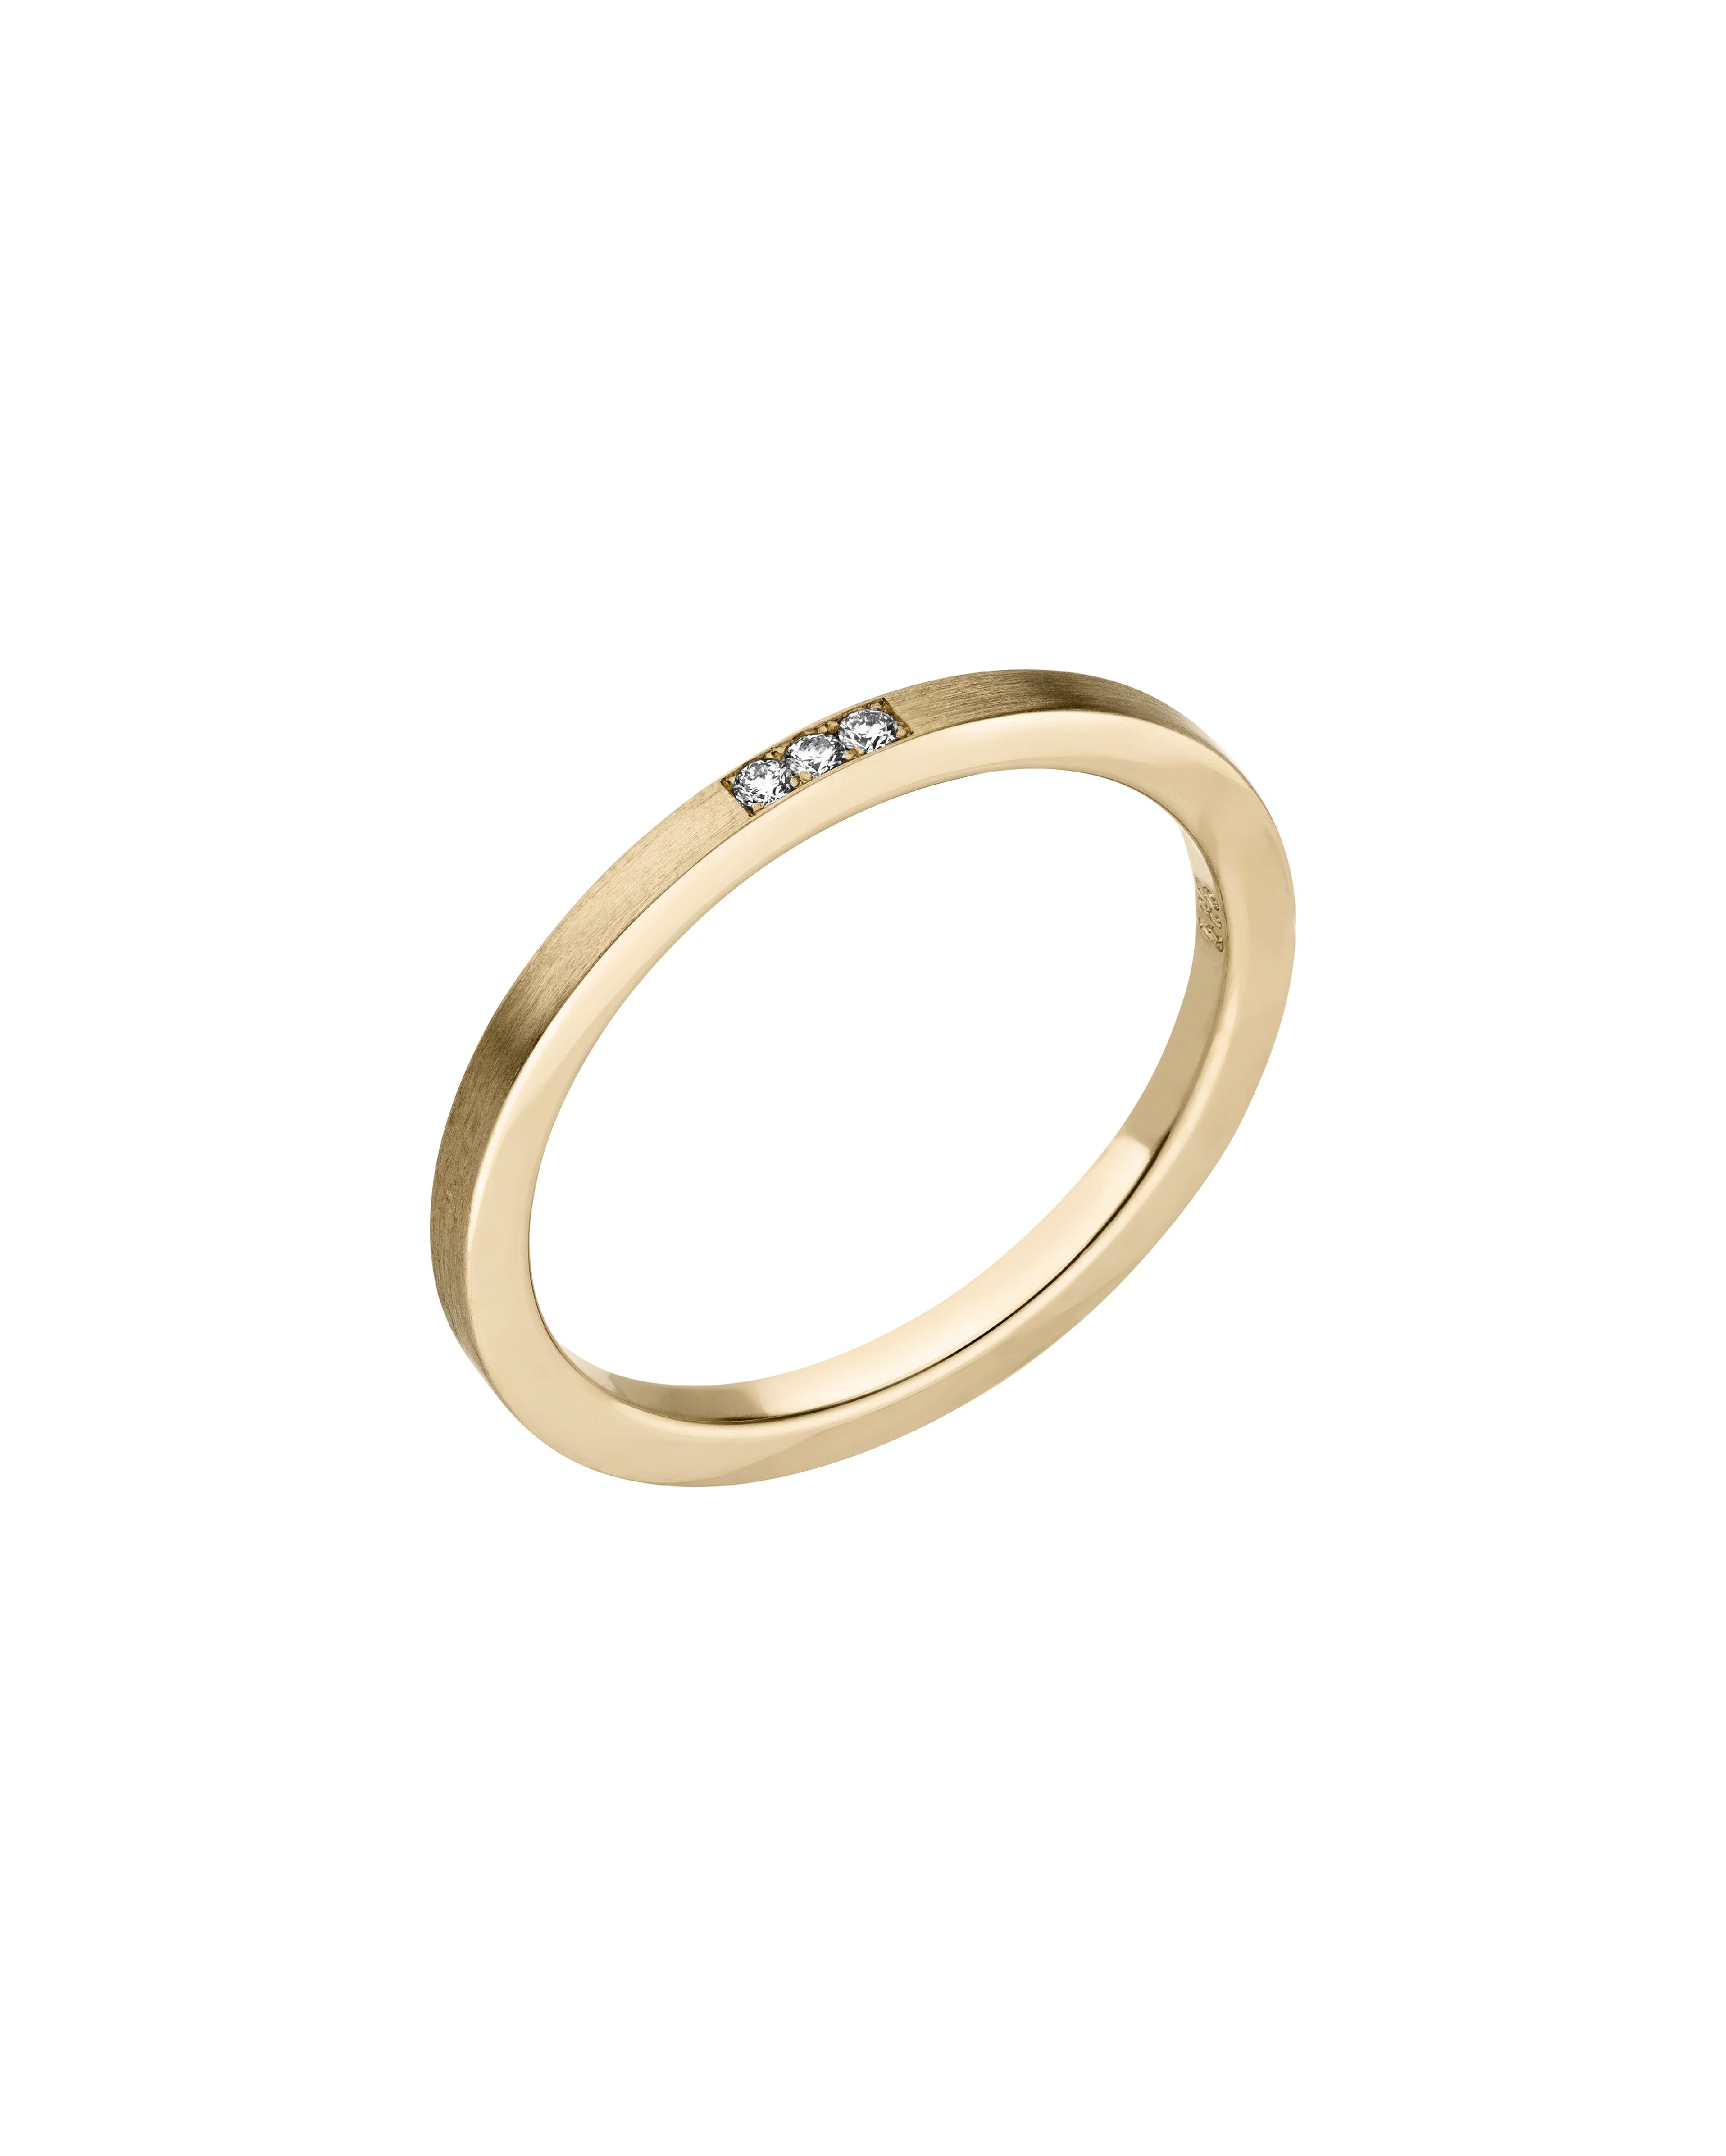 FINA SQUARE  - Verlobungsring Gold - Ring Gelbgold 585